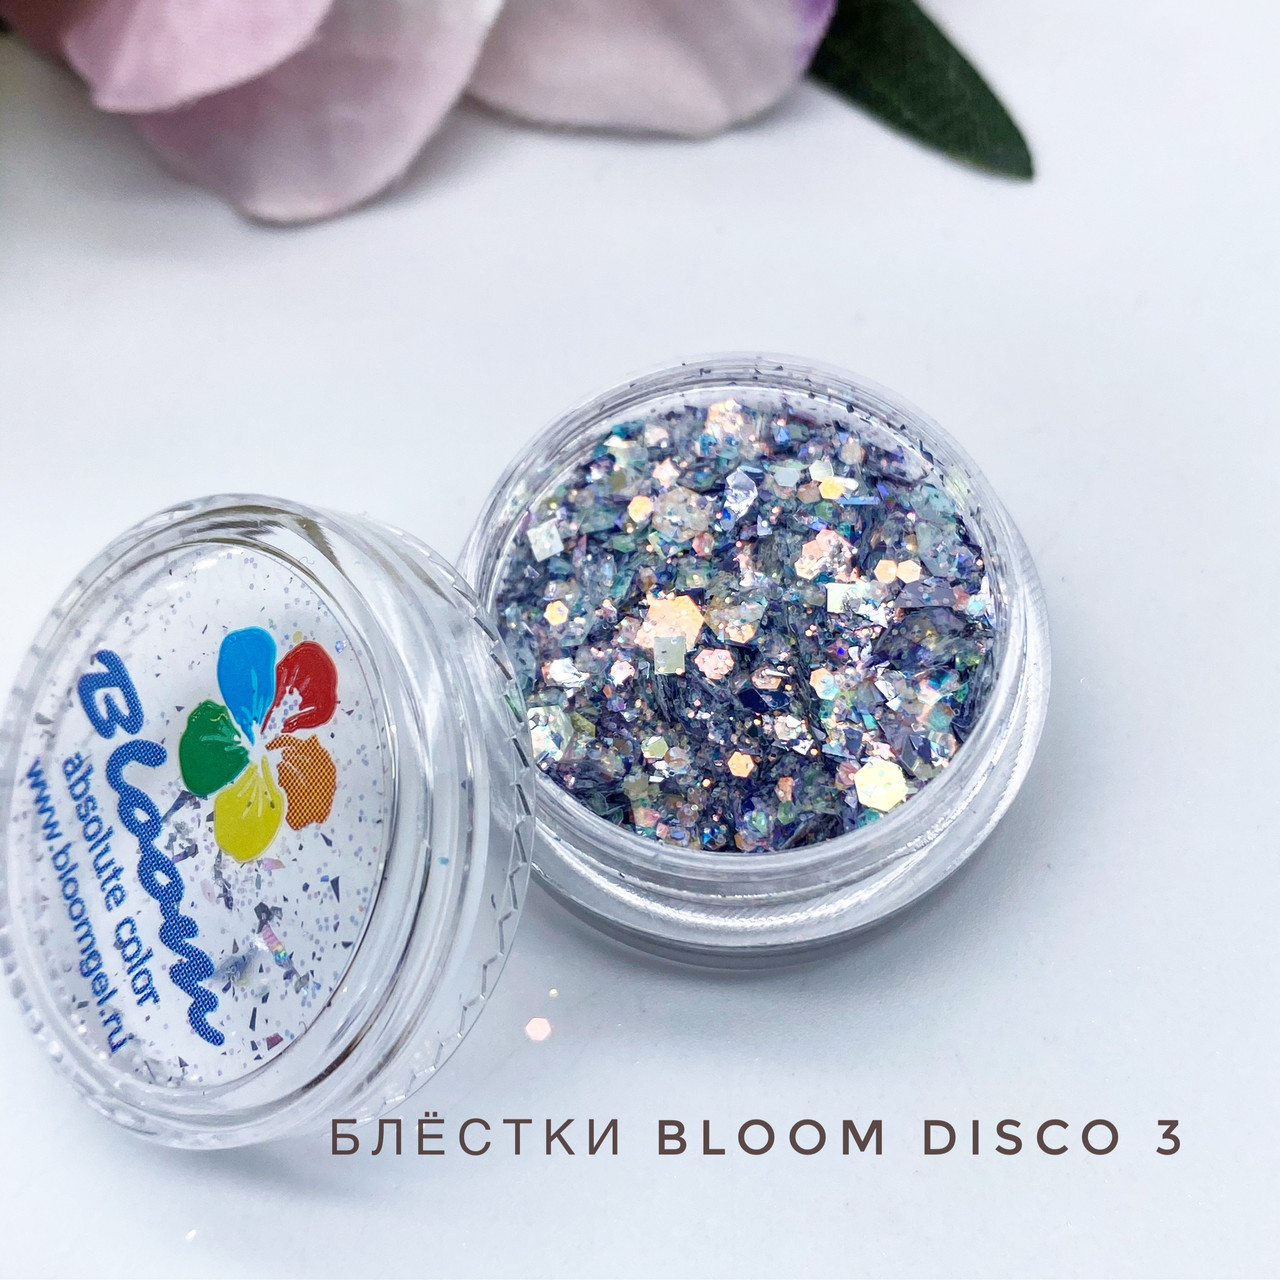 Блестки Bloom Disco 3